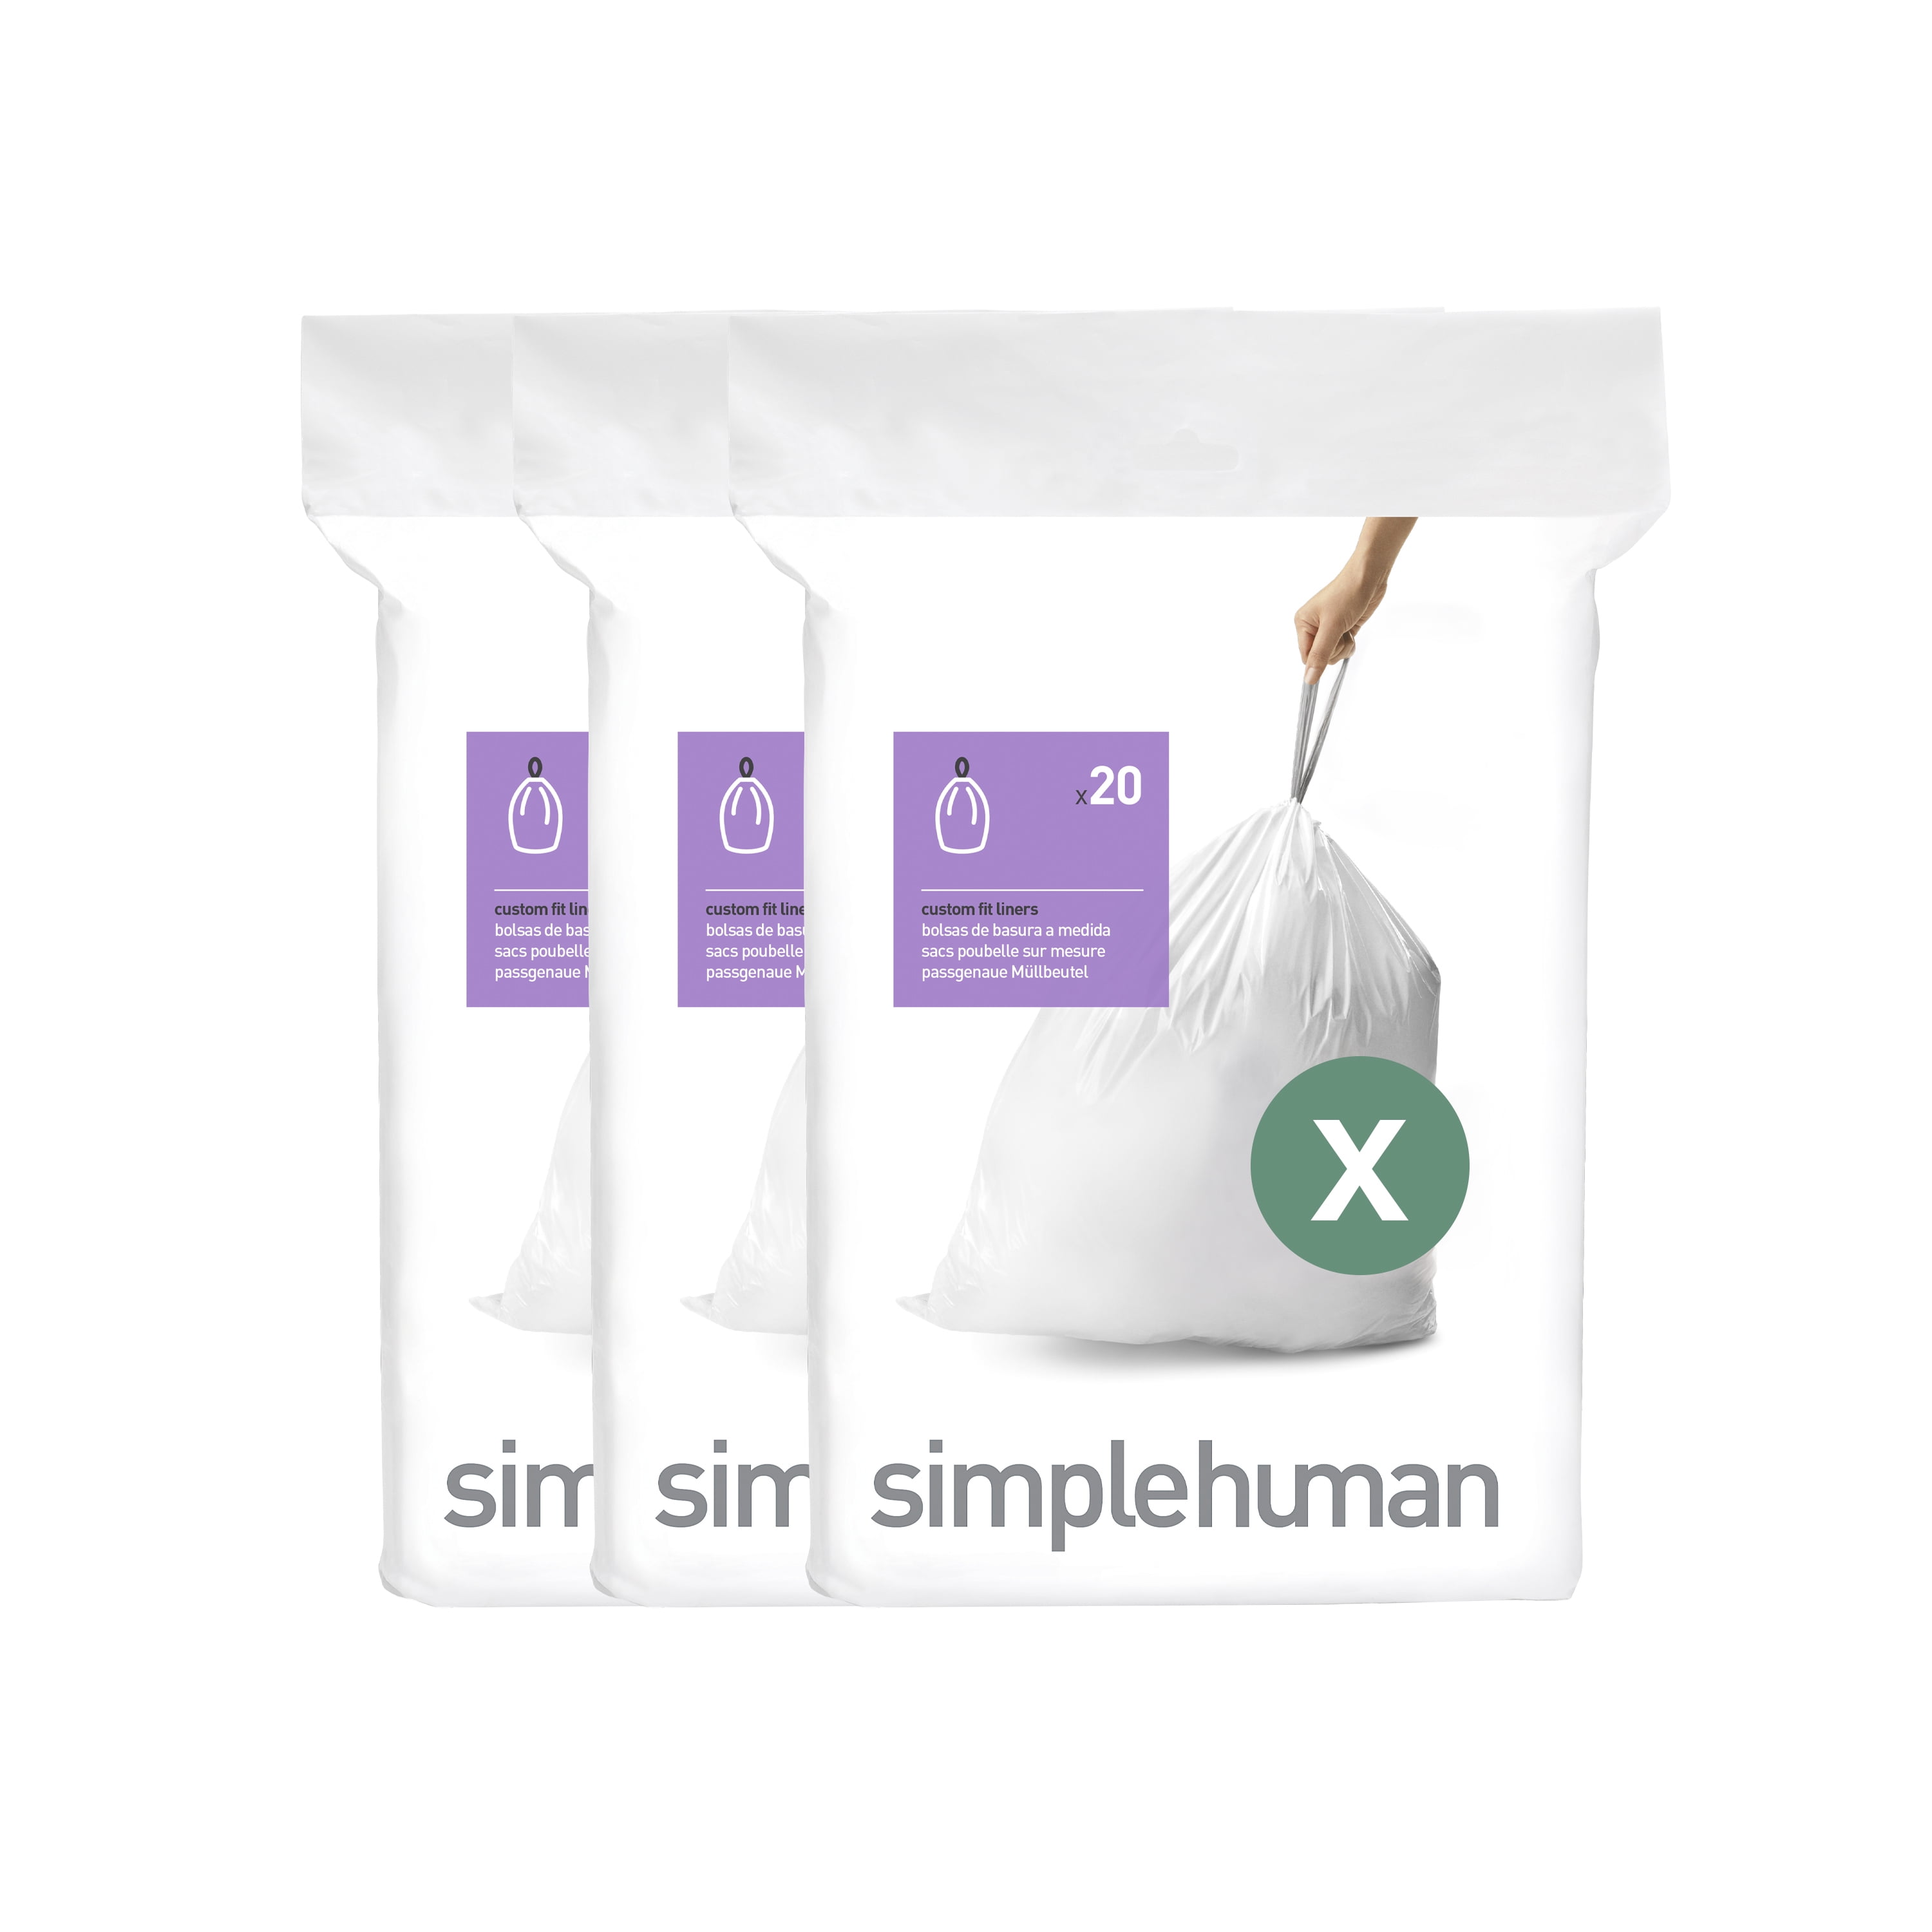 simplehuman Code x Custom Fit Trash Can Liner, 3 Refill Packs (60 Count), 80 Liter / 21 Gallon